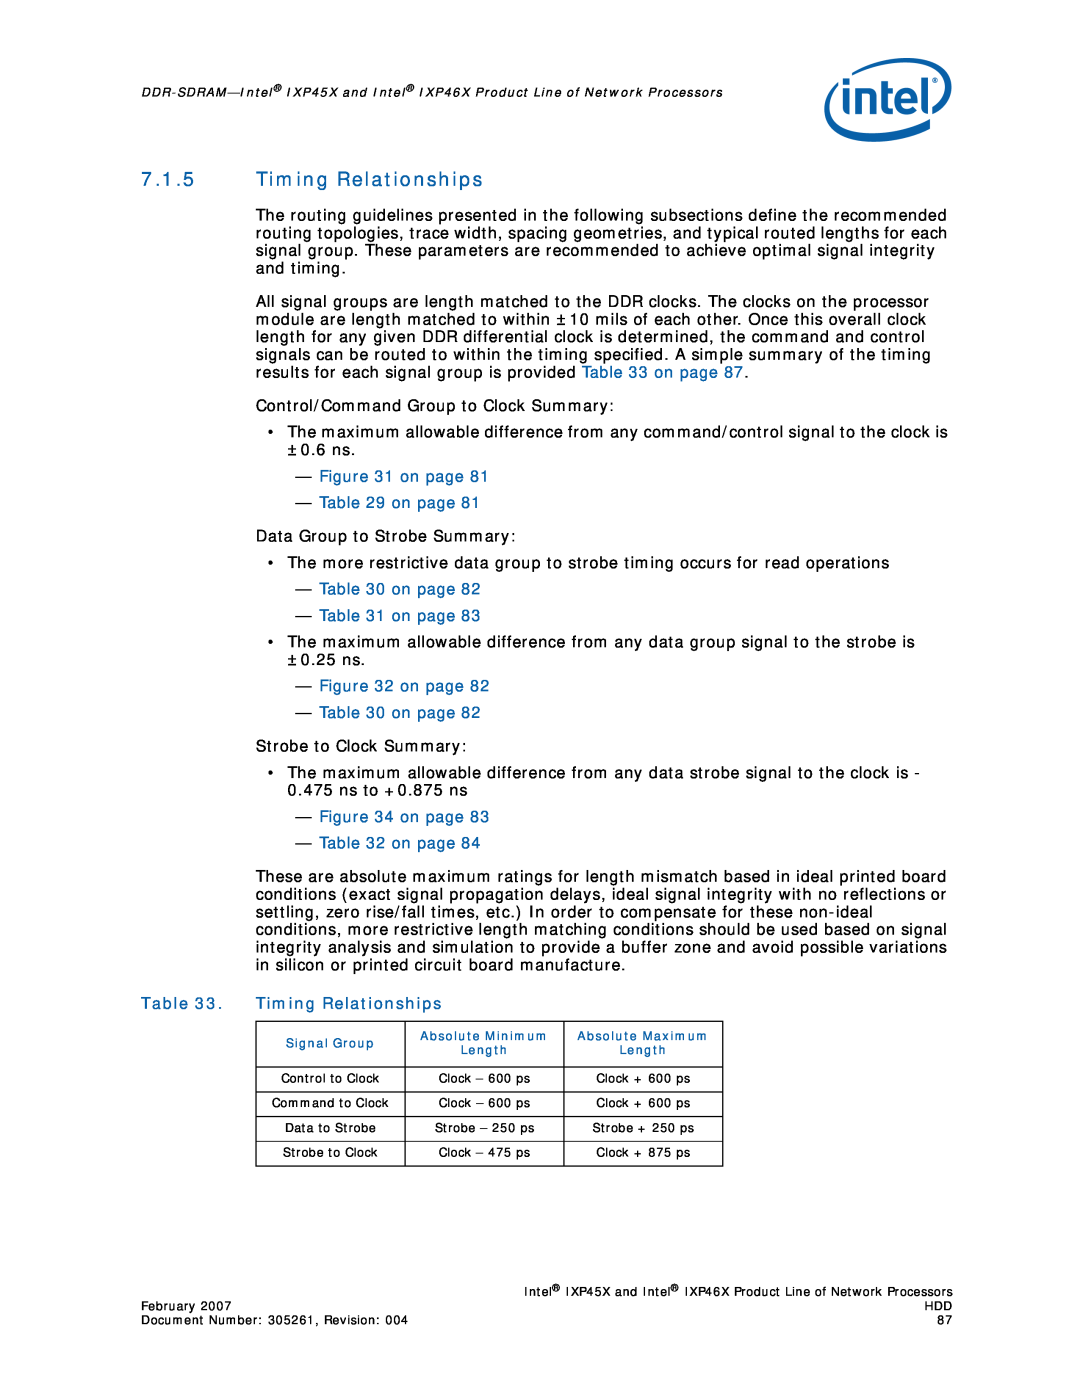 Intel IXP45X, IXP46X manual 7.1.5Timing Relationships, on page - on page, on page — on page 